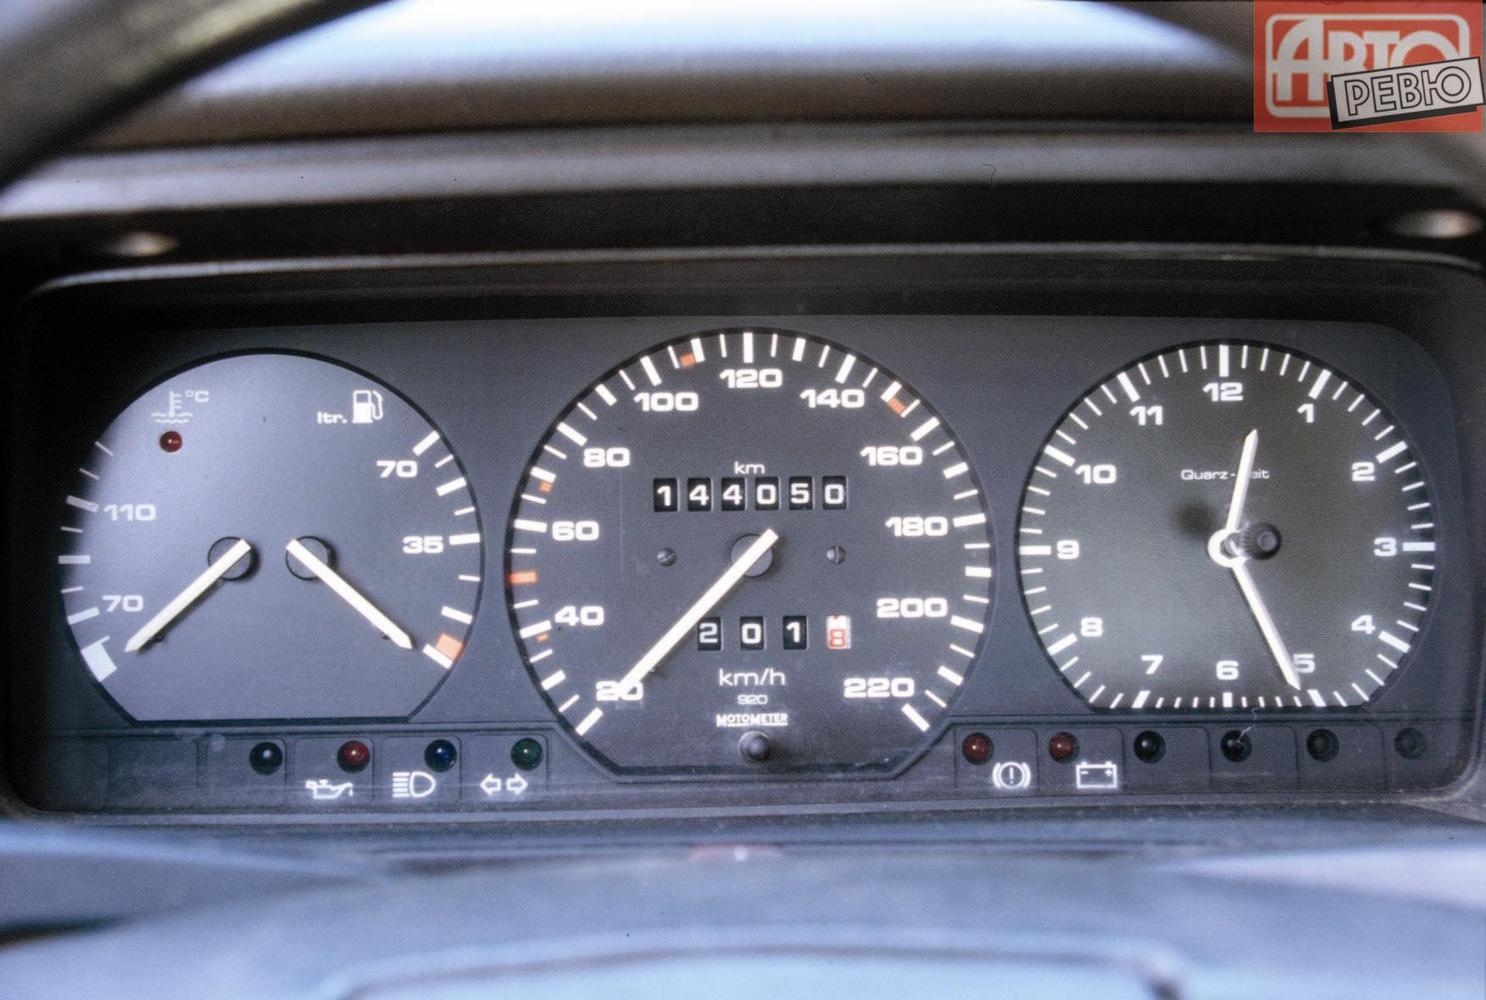 универсал Volkswagen Passat 1988 - 1993г выпуска модификация 1.6 MT (72 л.с.)